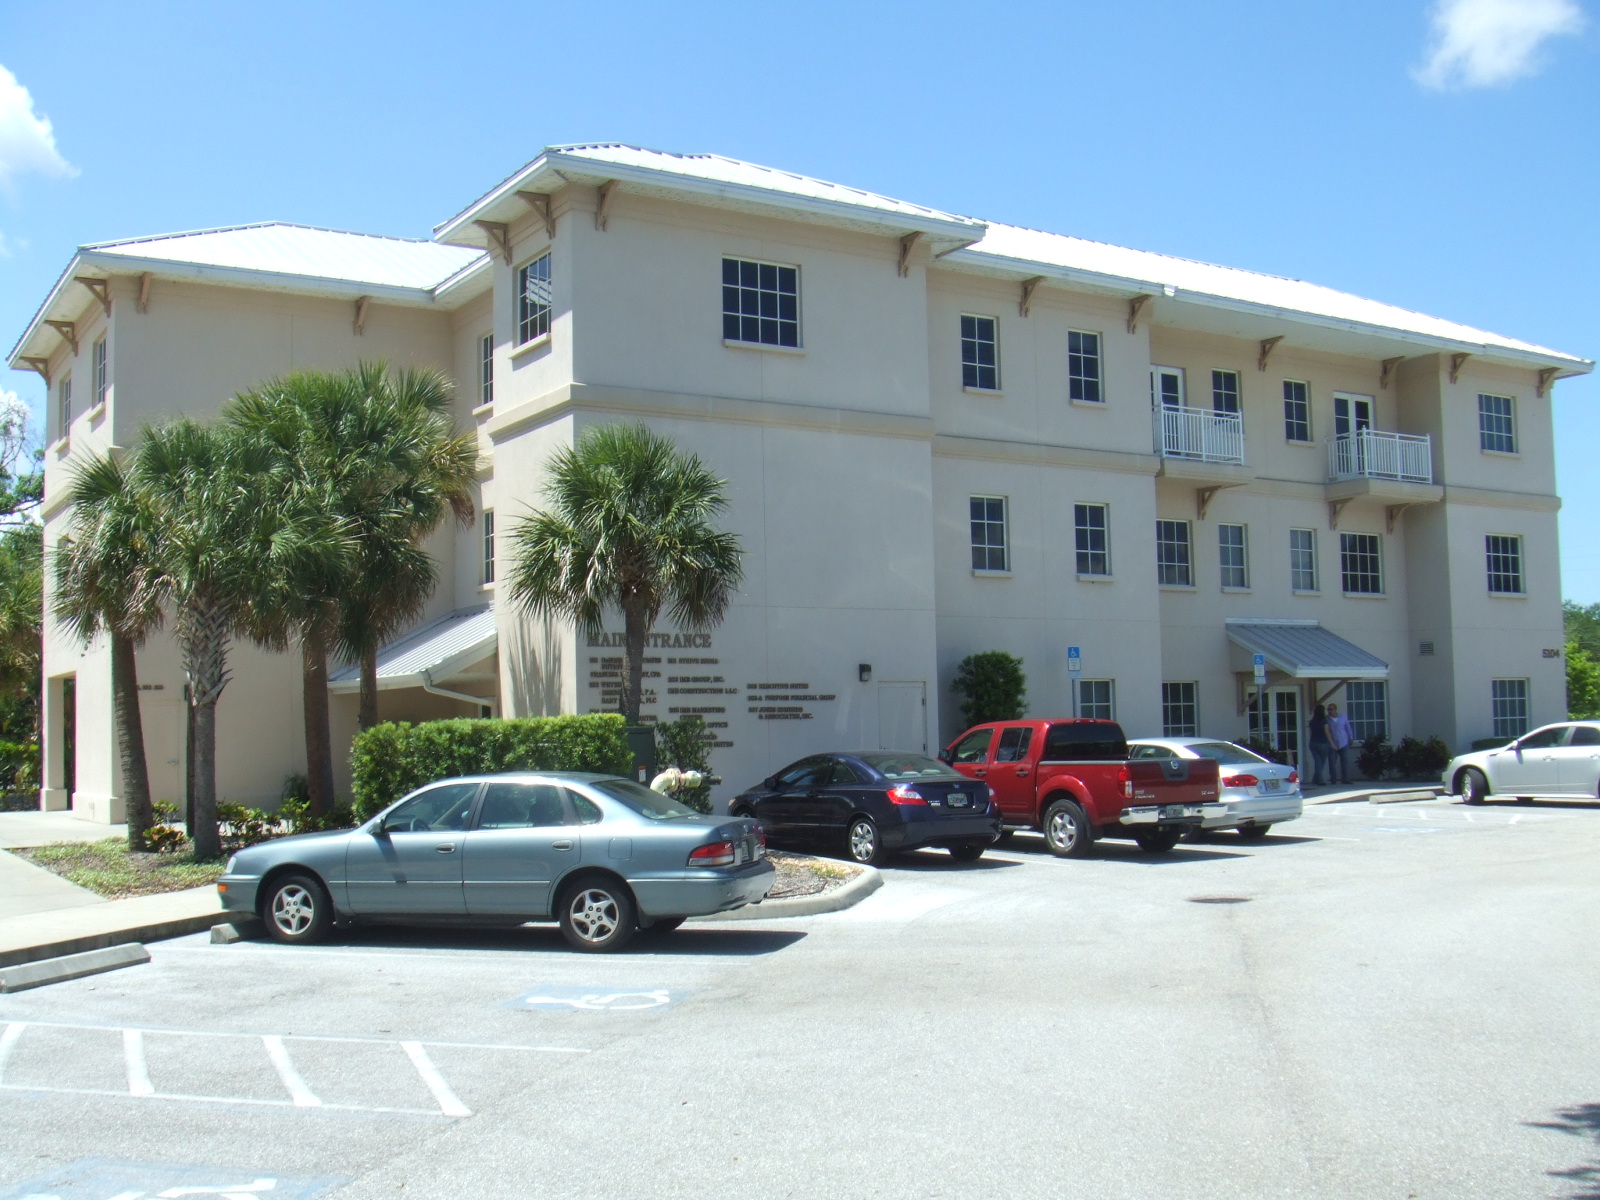 IME Office Building, Sarasota, Florida - Appraisal of Office and Adjacent Land